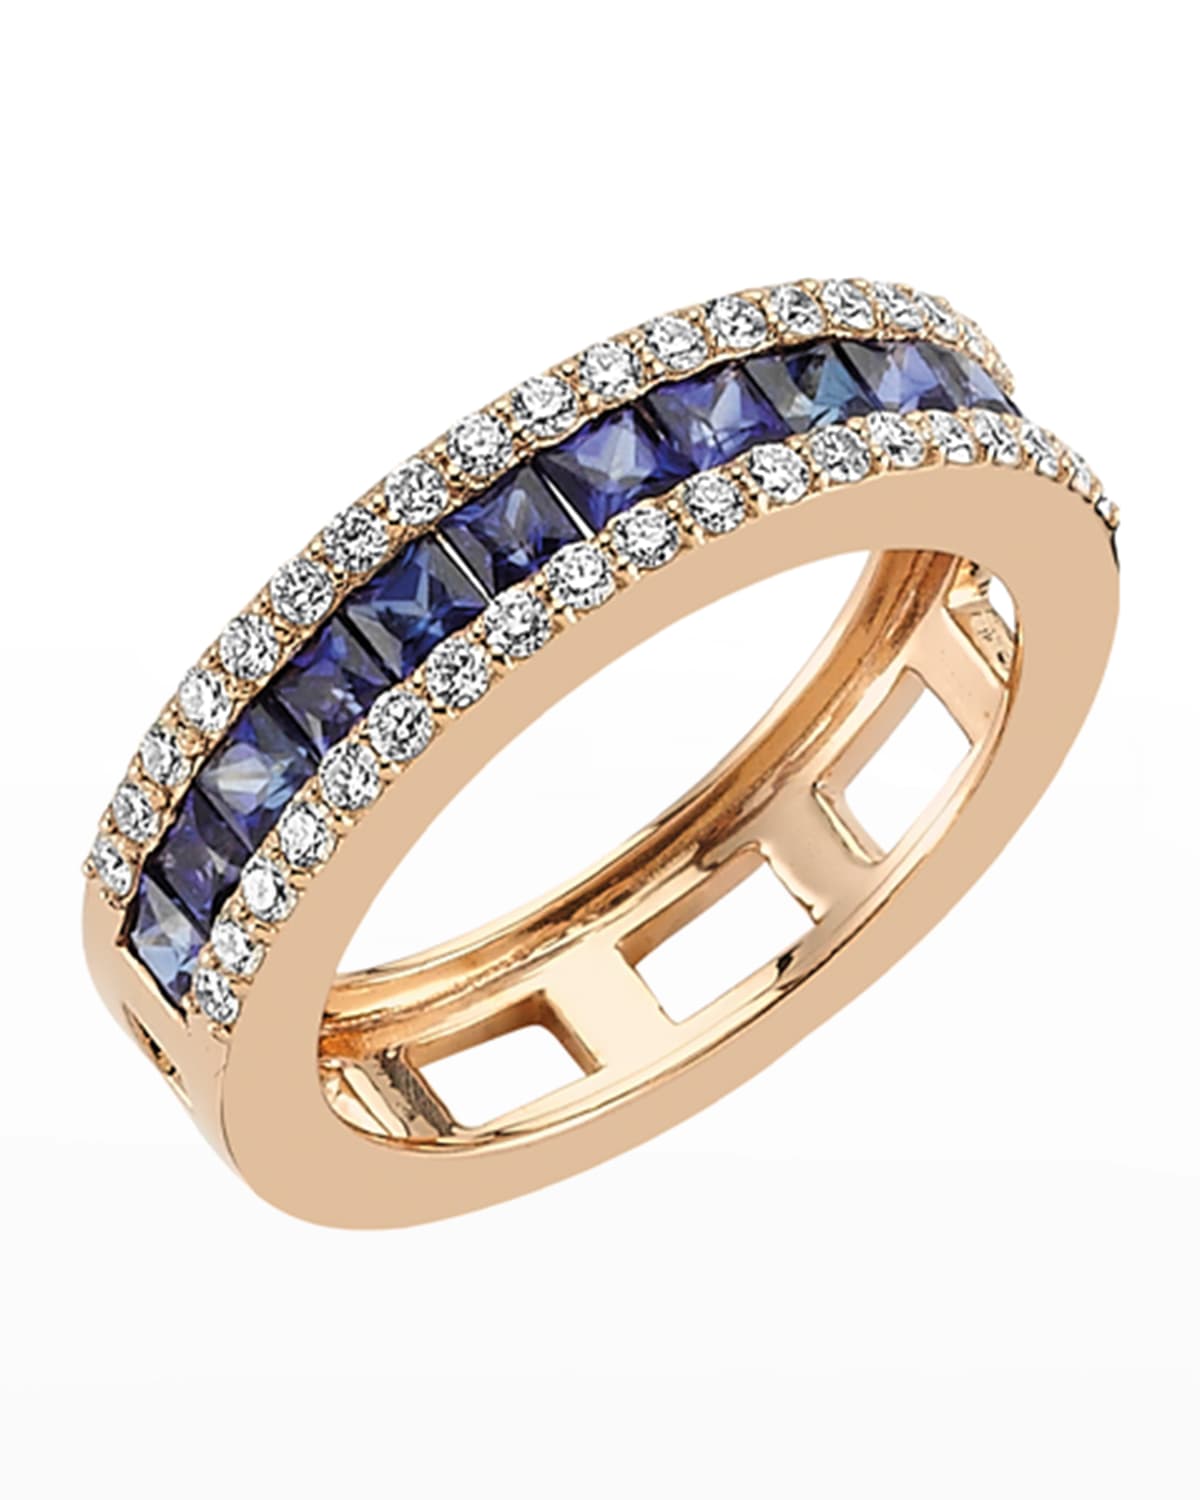 Mondrian Blue Sapphire and Diamond Ring, Size 7